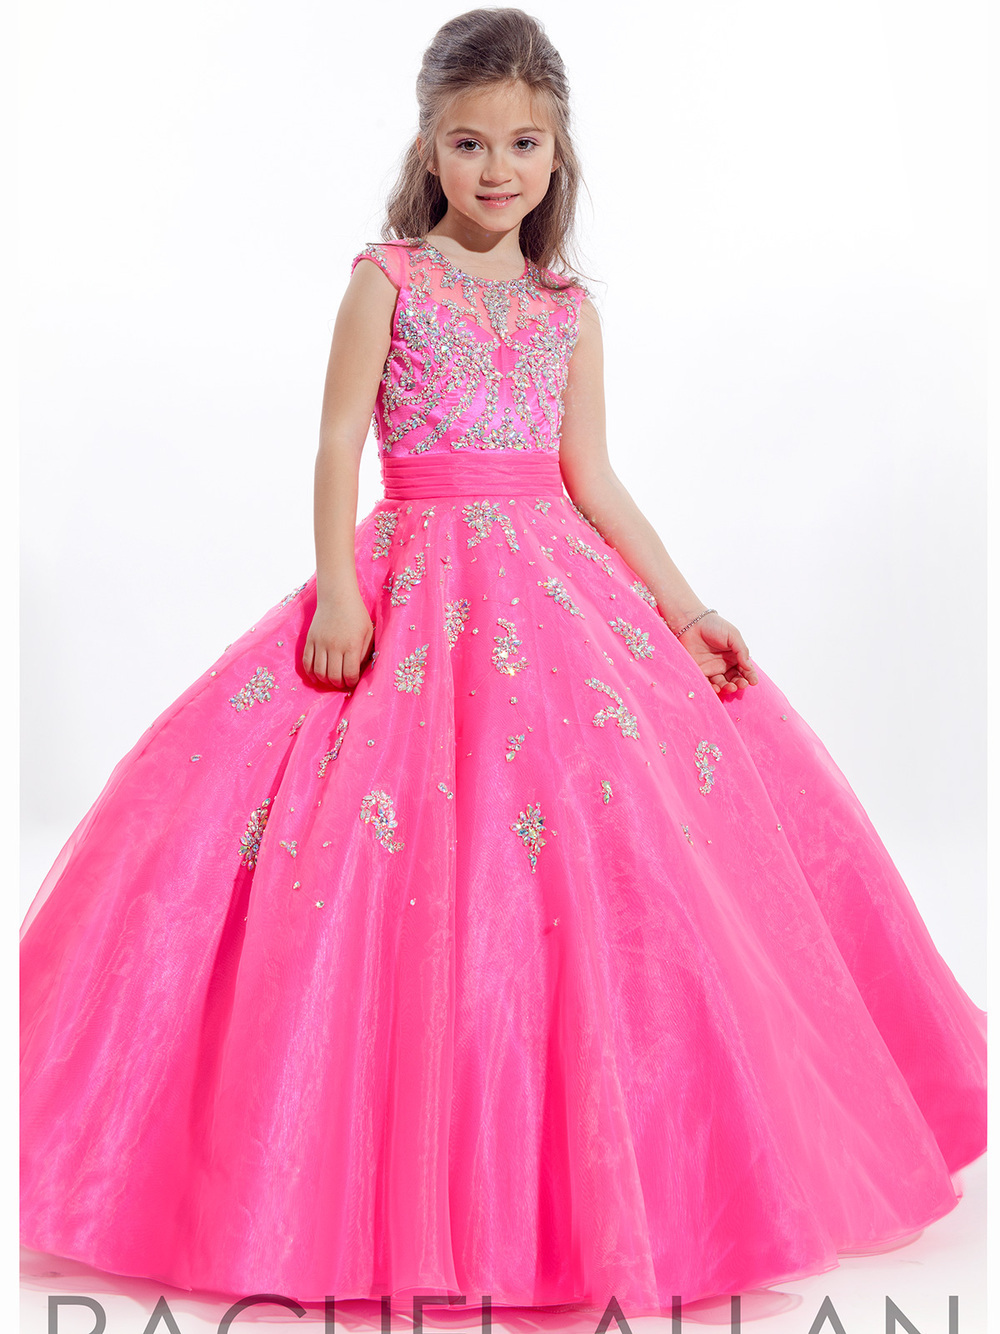 Girls Pink Dress